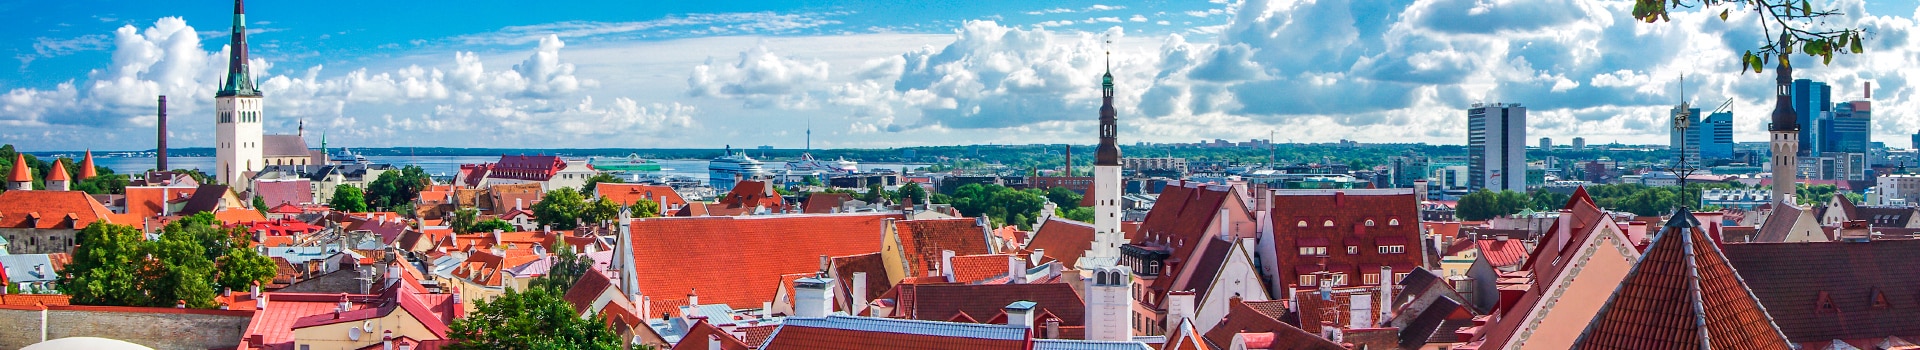 Amsterdam - Tallinn